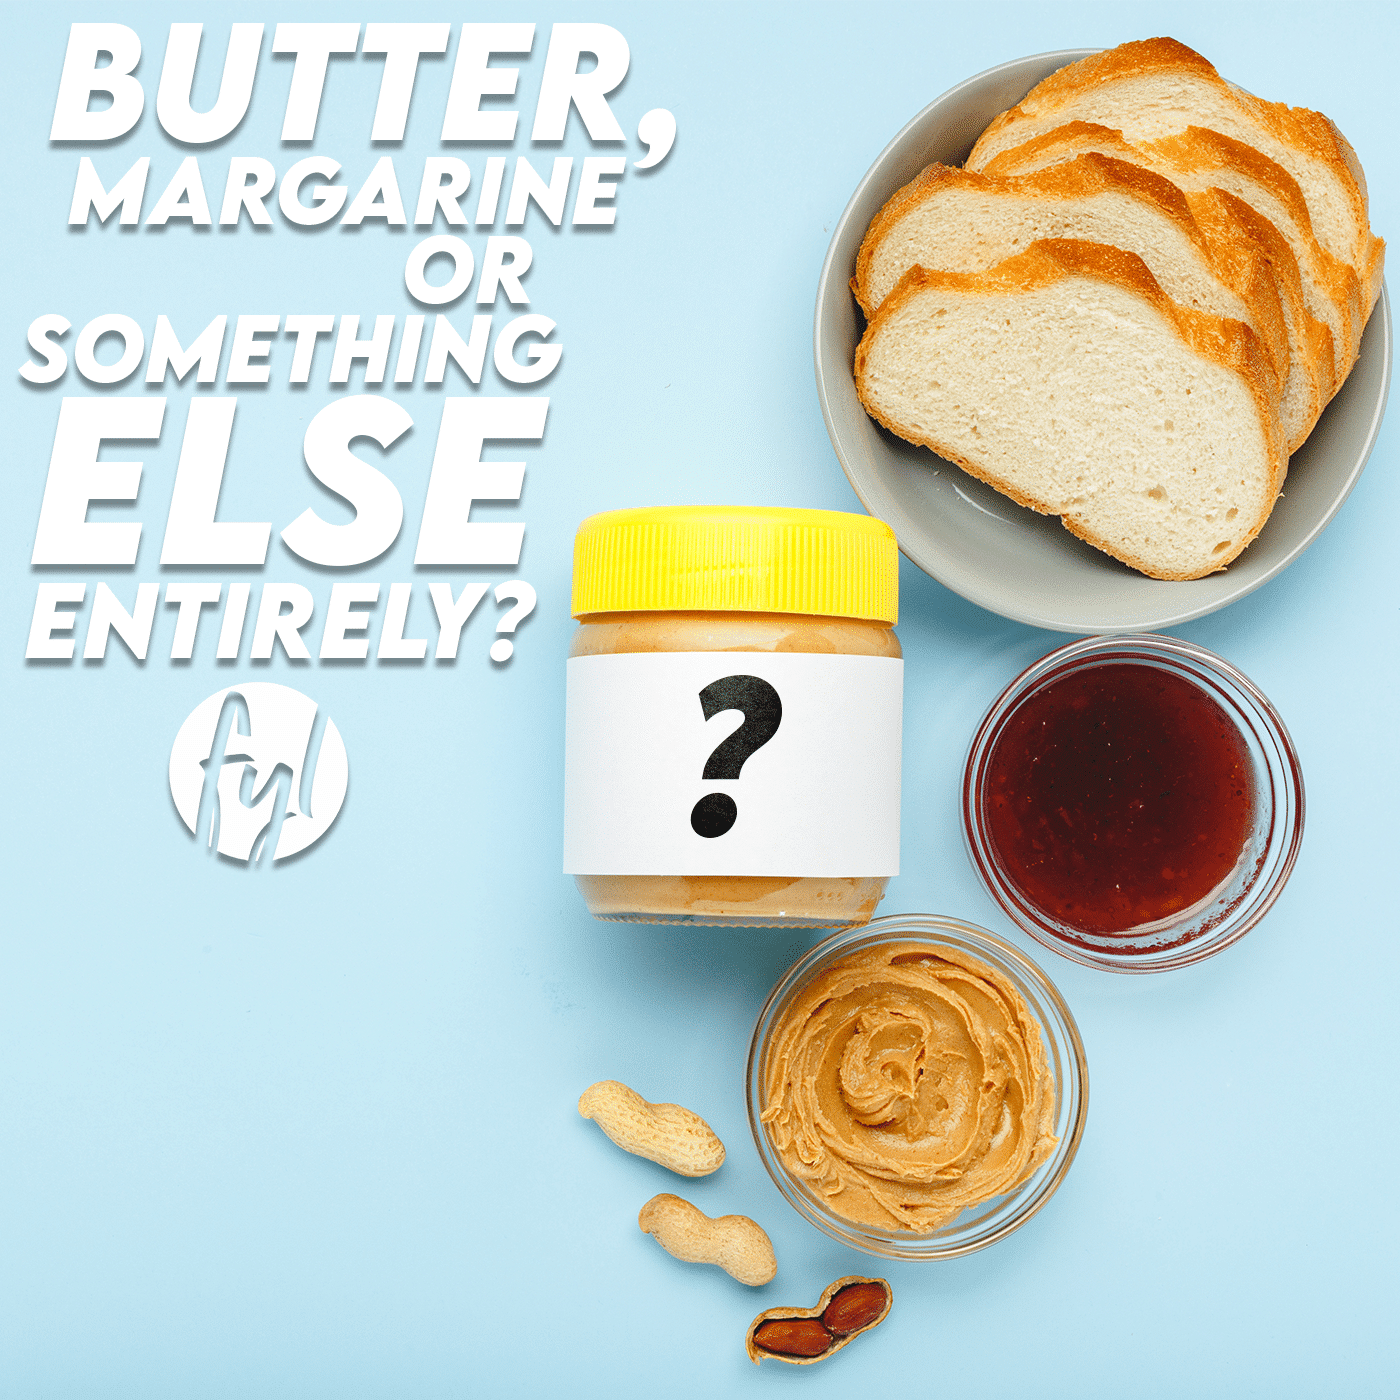 Butter, Margarine or Something Else Entirely?